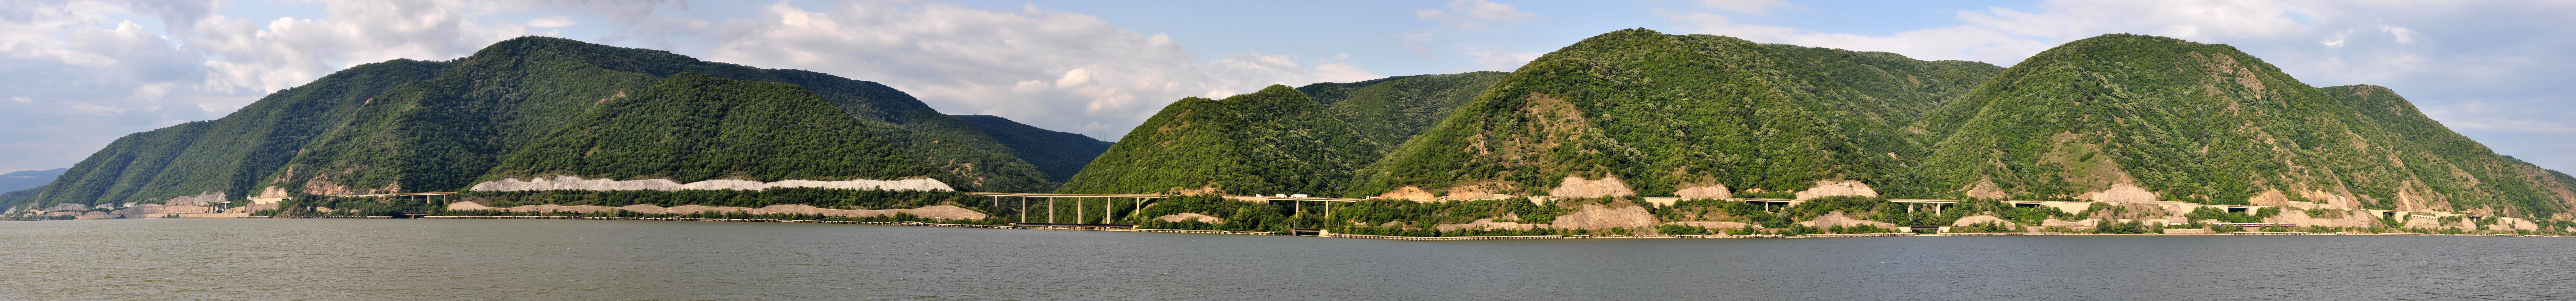 The Iron Gates - Serbia - Rumania2.jpg